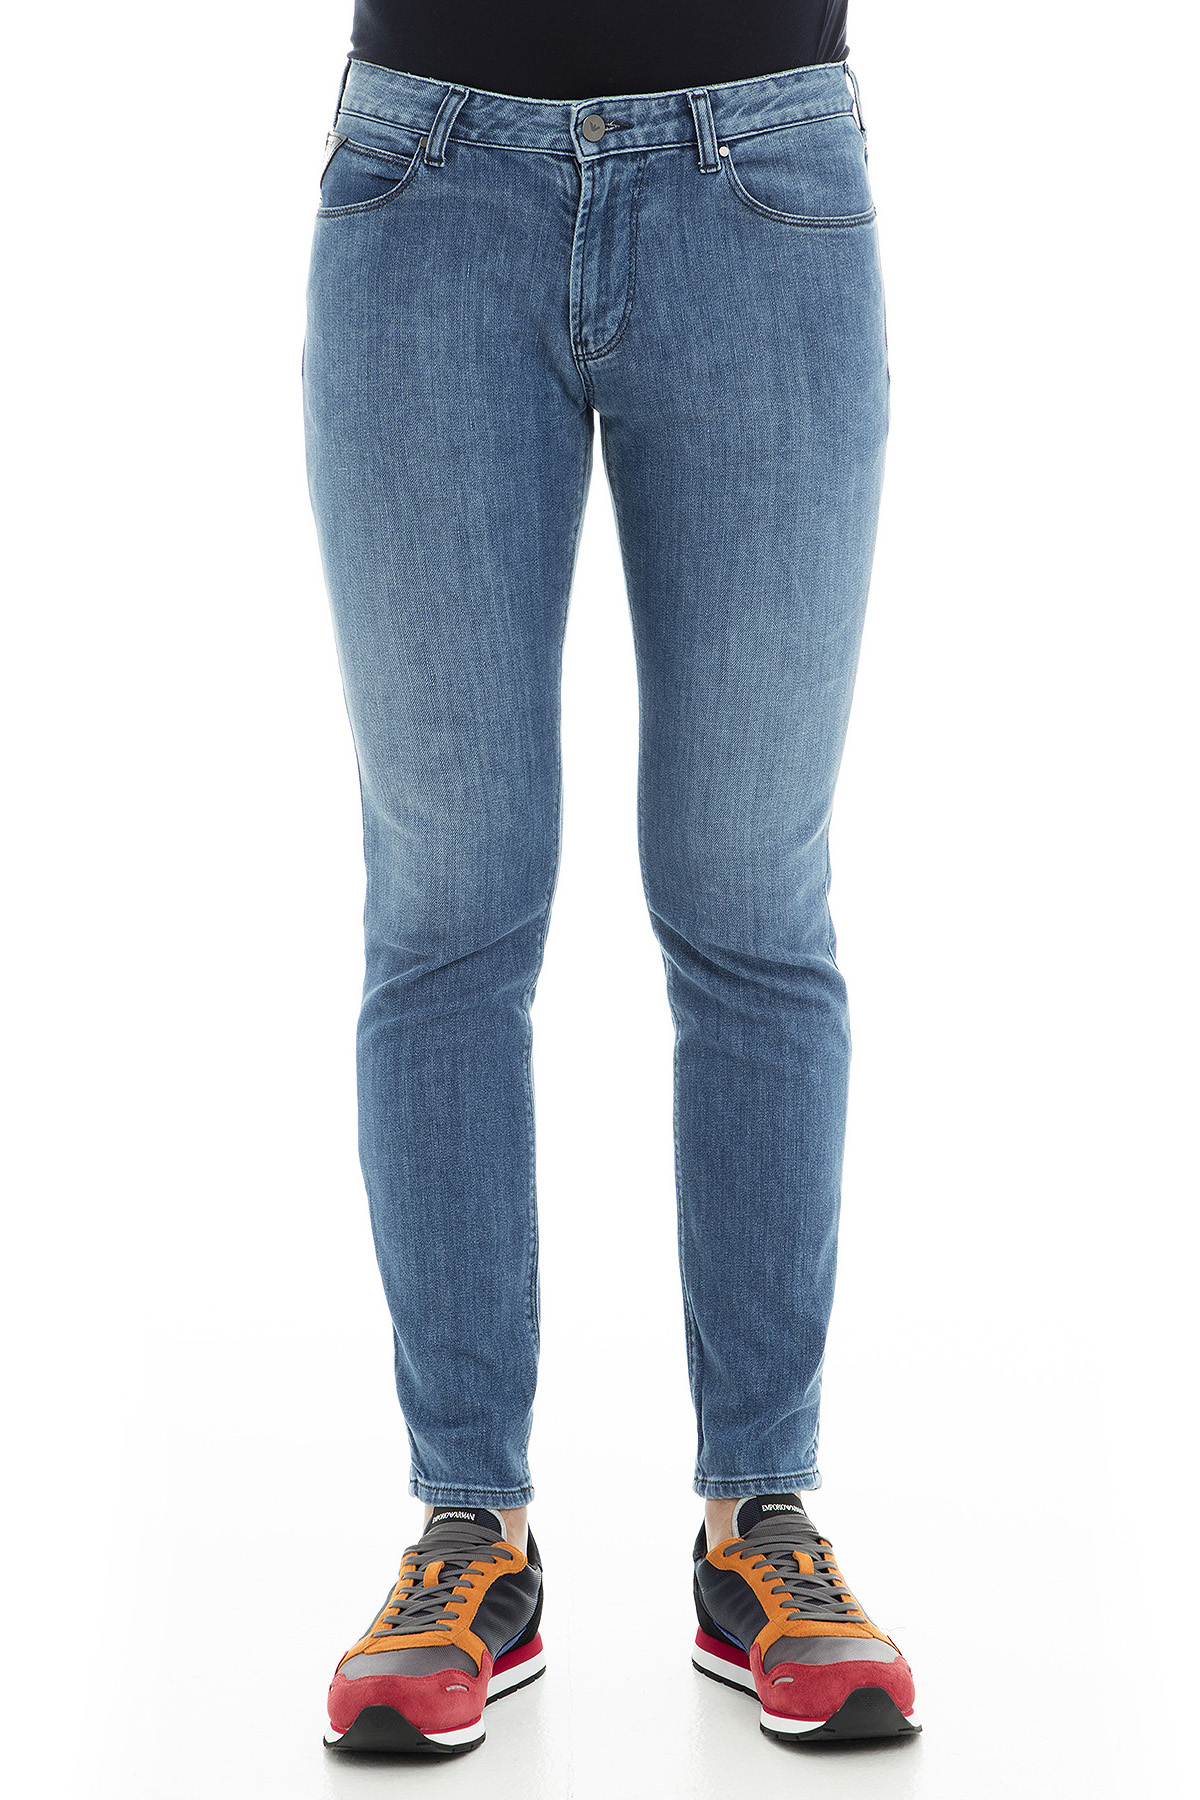 Emporio Armani J36 Jeans Erkek Kot Pantolon 3G1J36 1D5JZ 0941 MAVİ